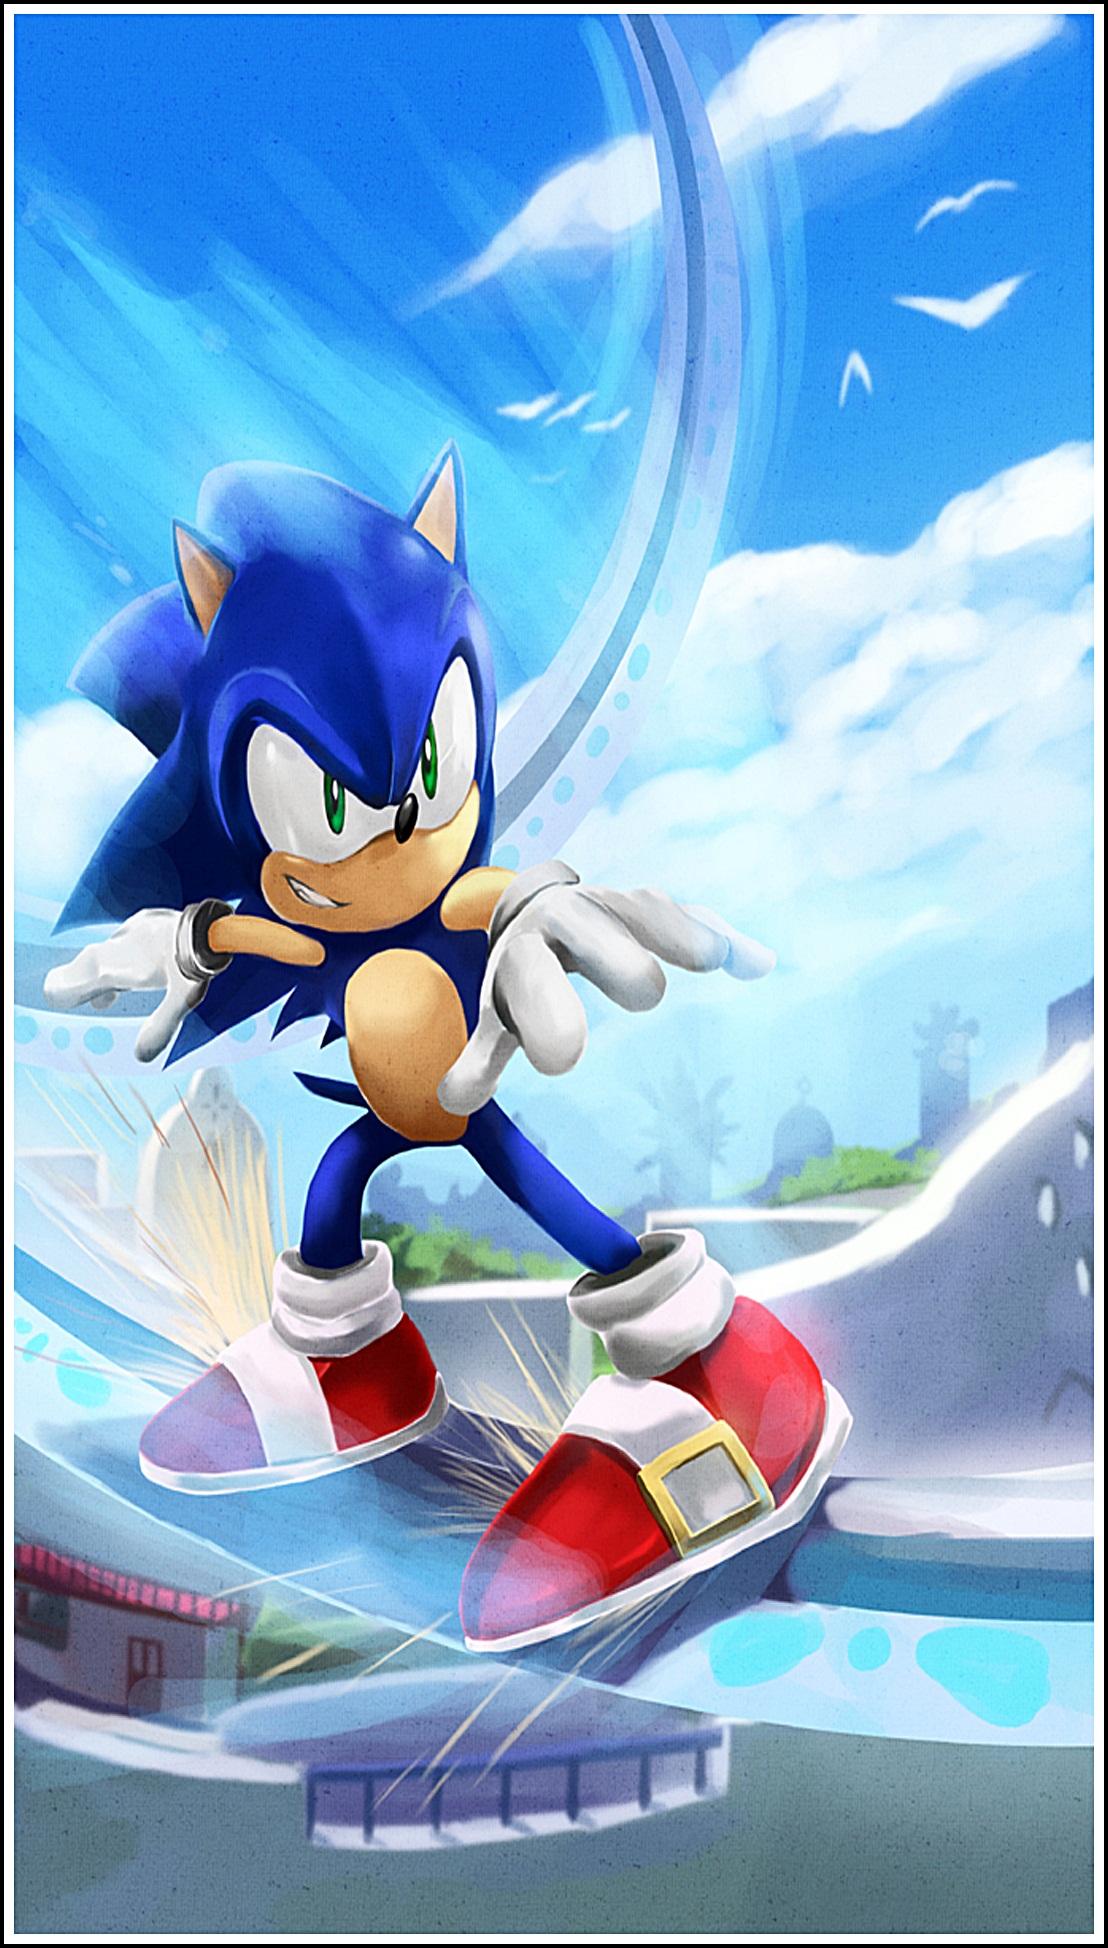 Hd Sonic Hedgehog Wallpapers Apk 1 0 Download For Android Download Hd Sonic Hedgehog Wallpapers Apk Latest Version Apkfab Com